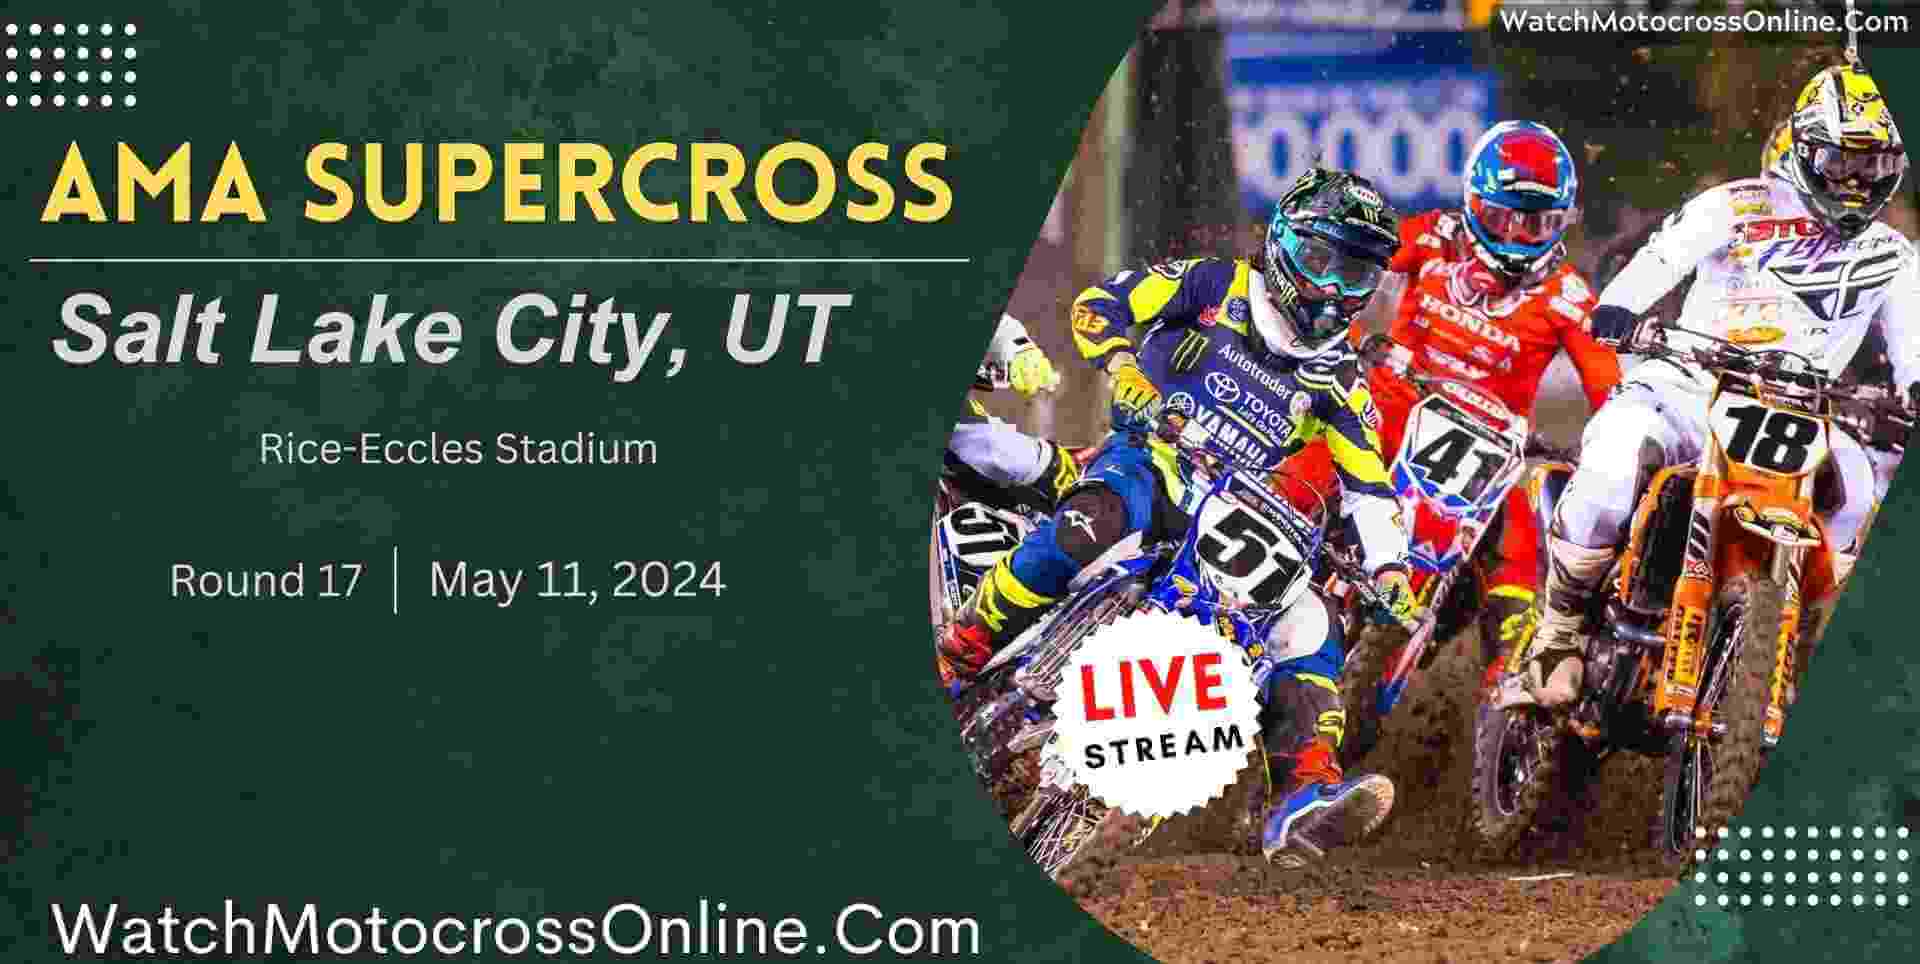 AMA Supercross Salt Lake City Live Stream 2024 Round 17